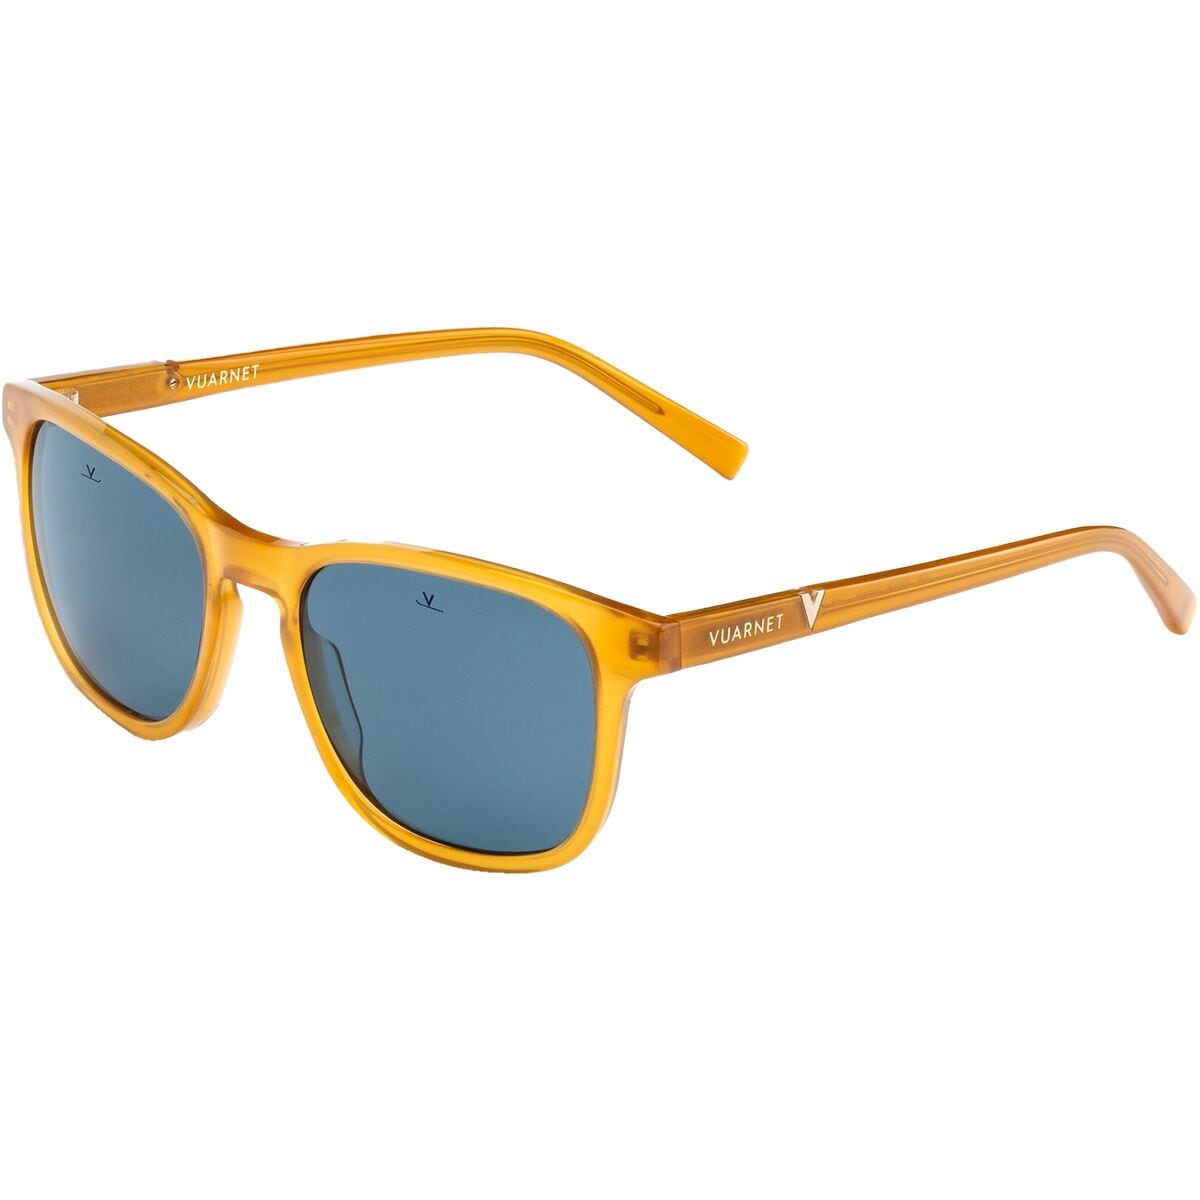 Vuarnet District 1618 Polarized Sunglasses - Accessories